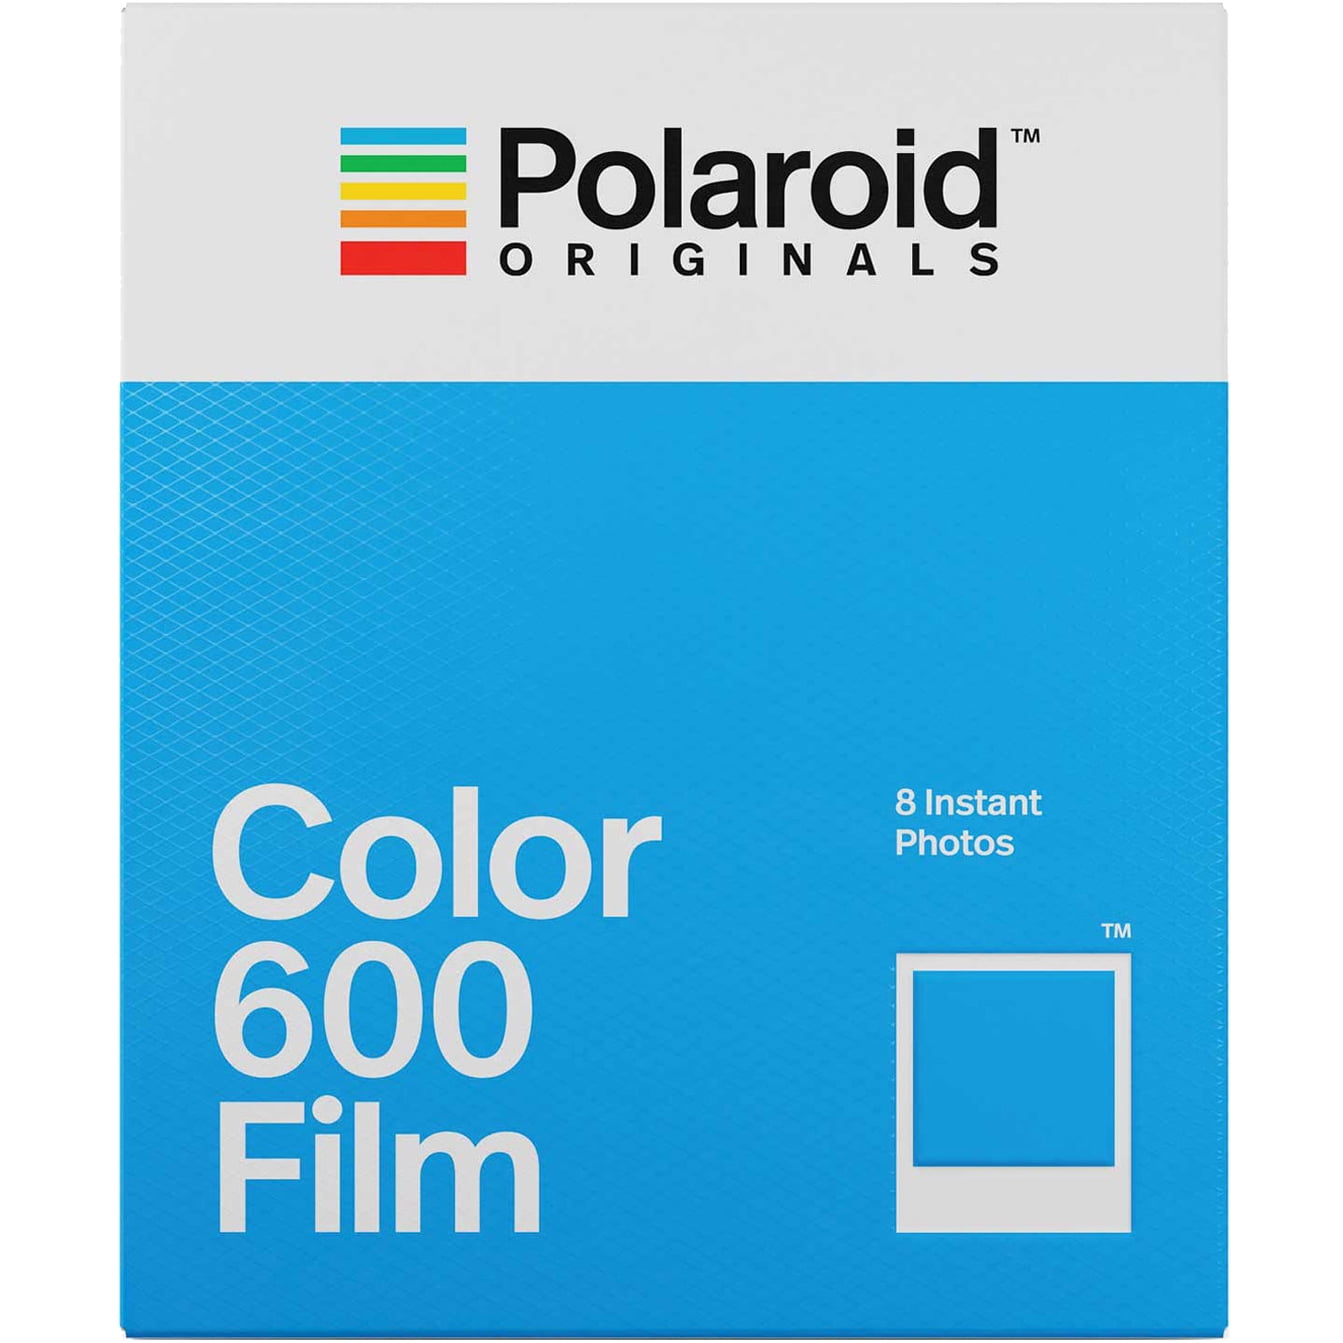 Zonsverduistering Vrijwillig Moederland Polaroid Originals Color Film for 600 - Walmart.com